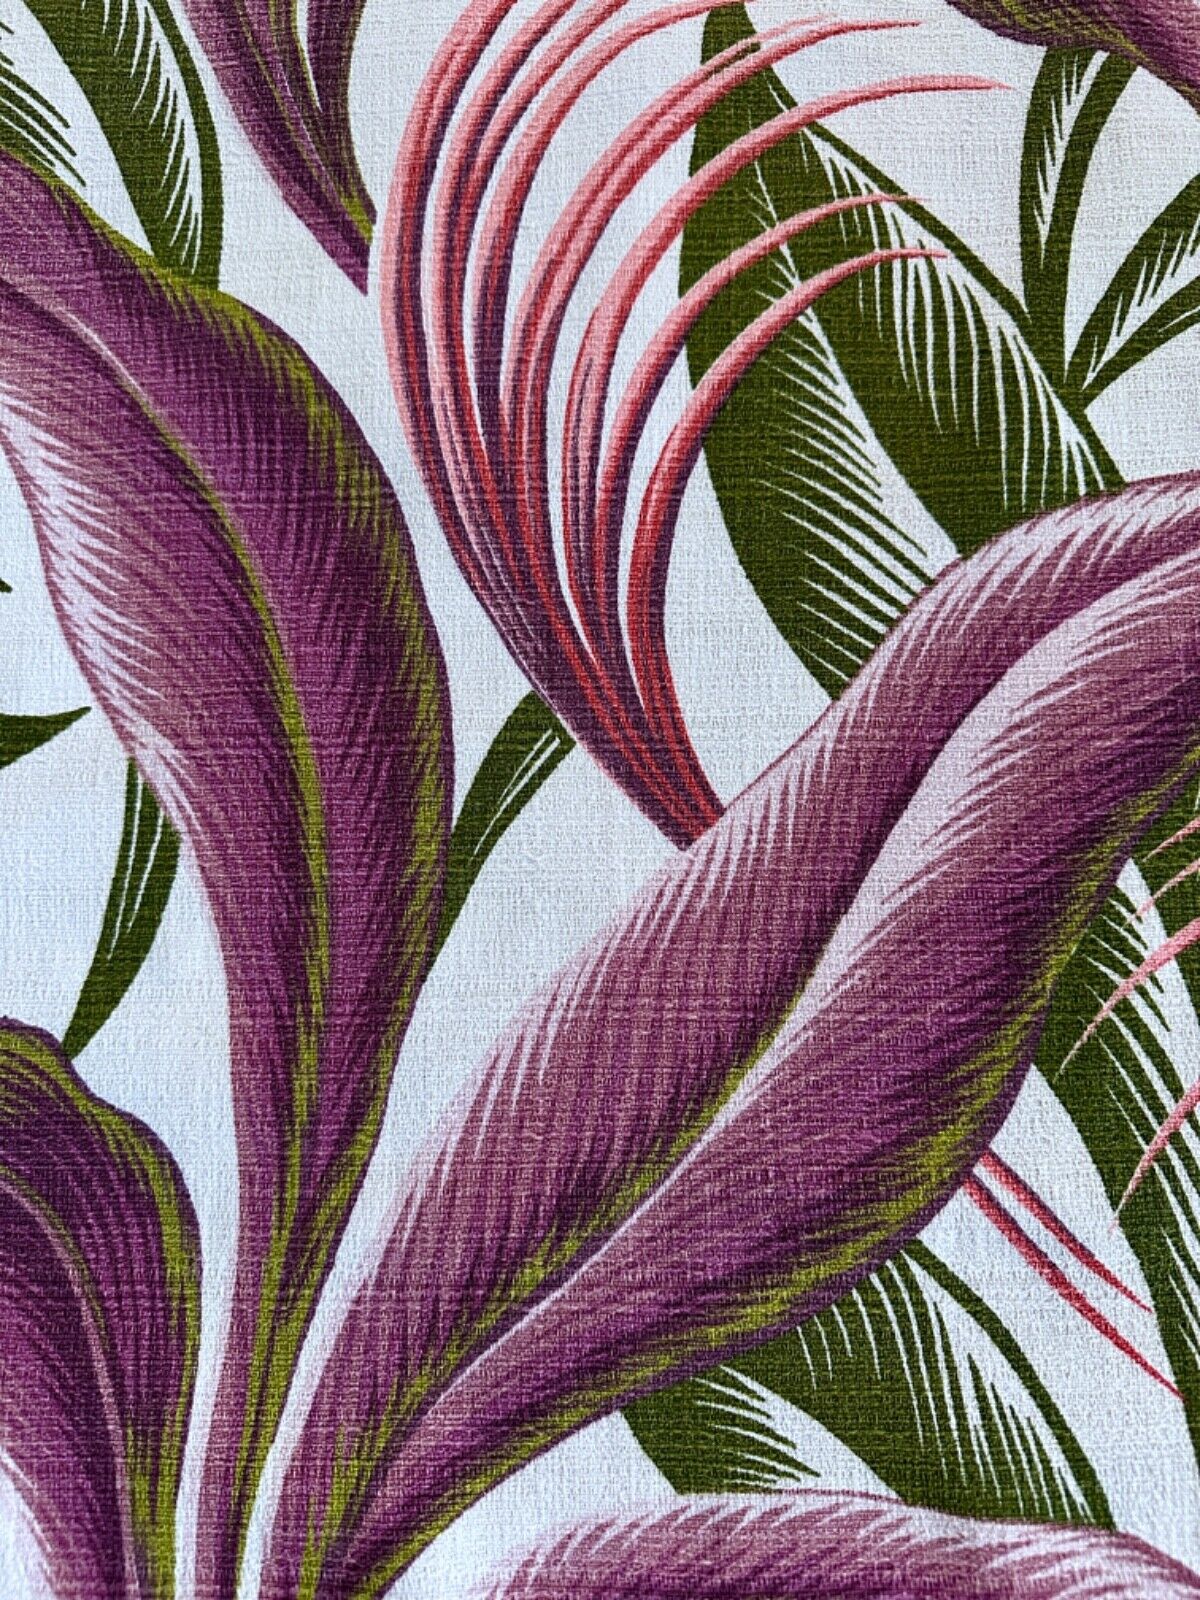 Tropical Pride of Art Deco South Beach Miami 30's 40's Barkcloth Vintage Fabric